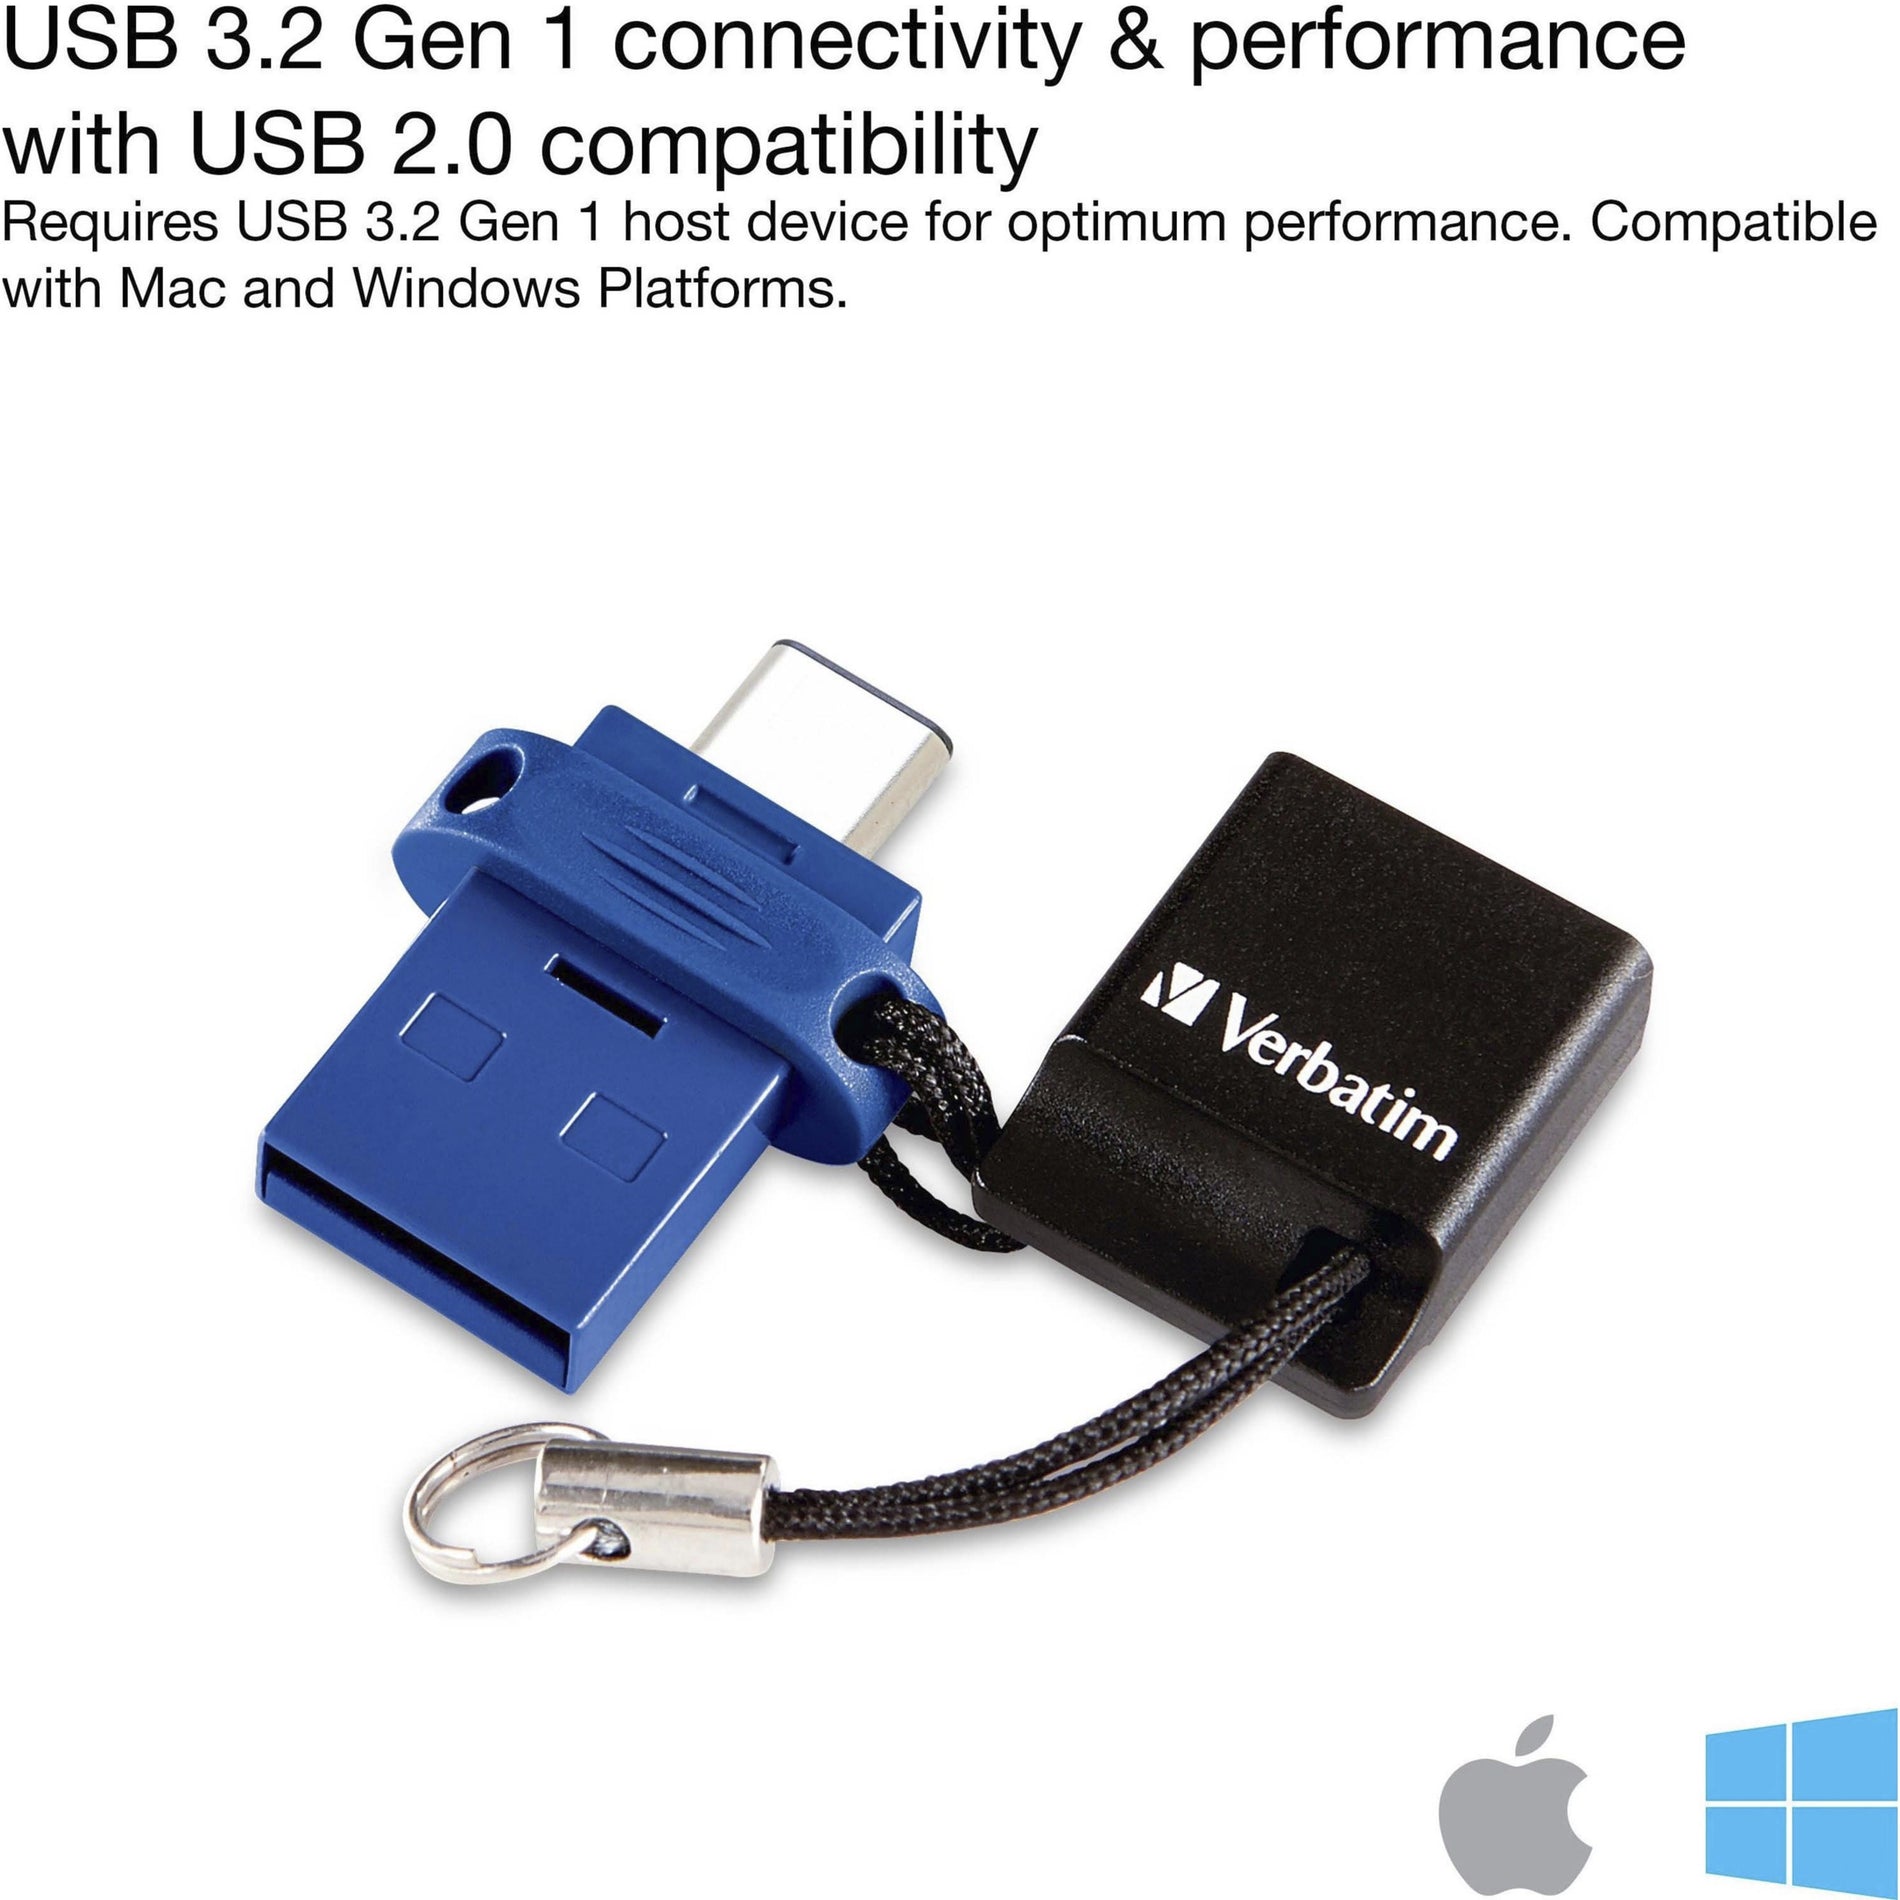 微查汶(Microban)、蓝色(Blue)、存储存放 (Store 'n' Go)、双USB 3.2 Gen 1 闪存驱动器(Dual USB 3.2 Gen 1 Flash Drive)、16GB